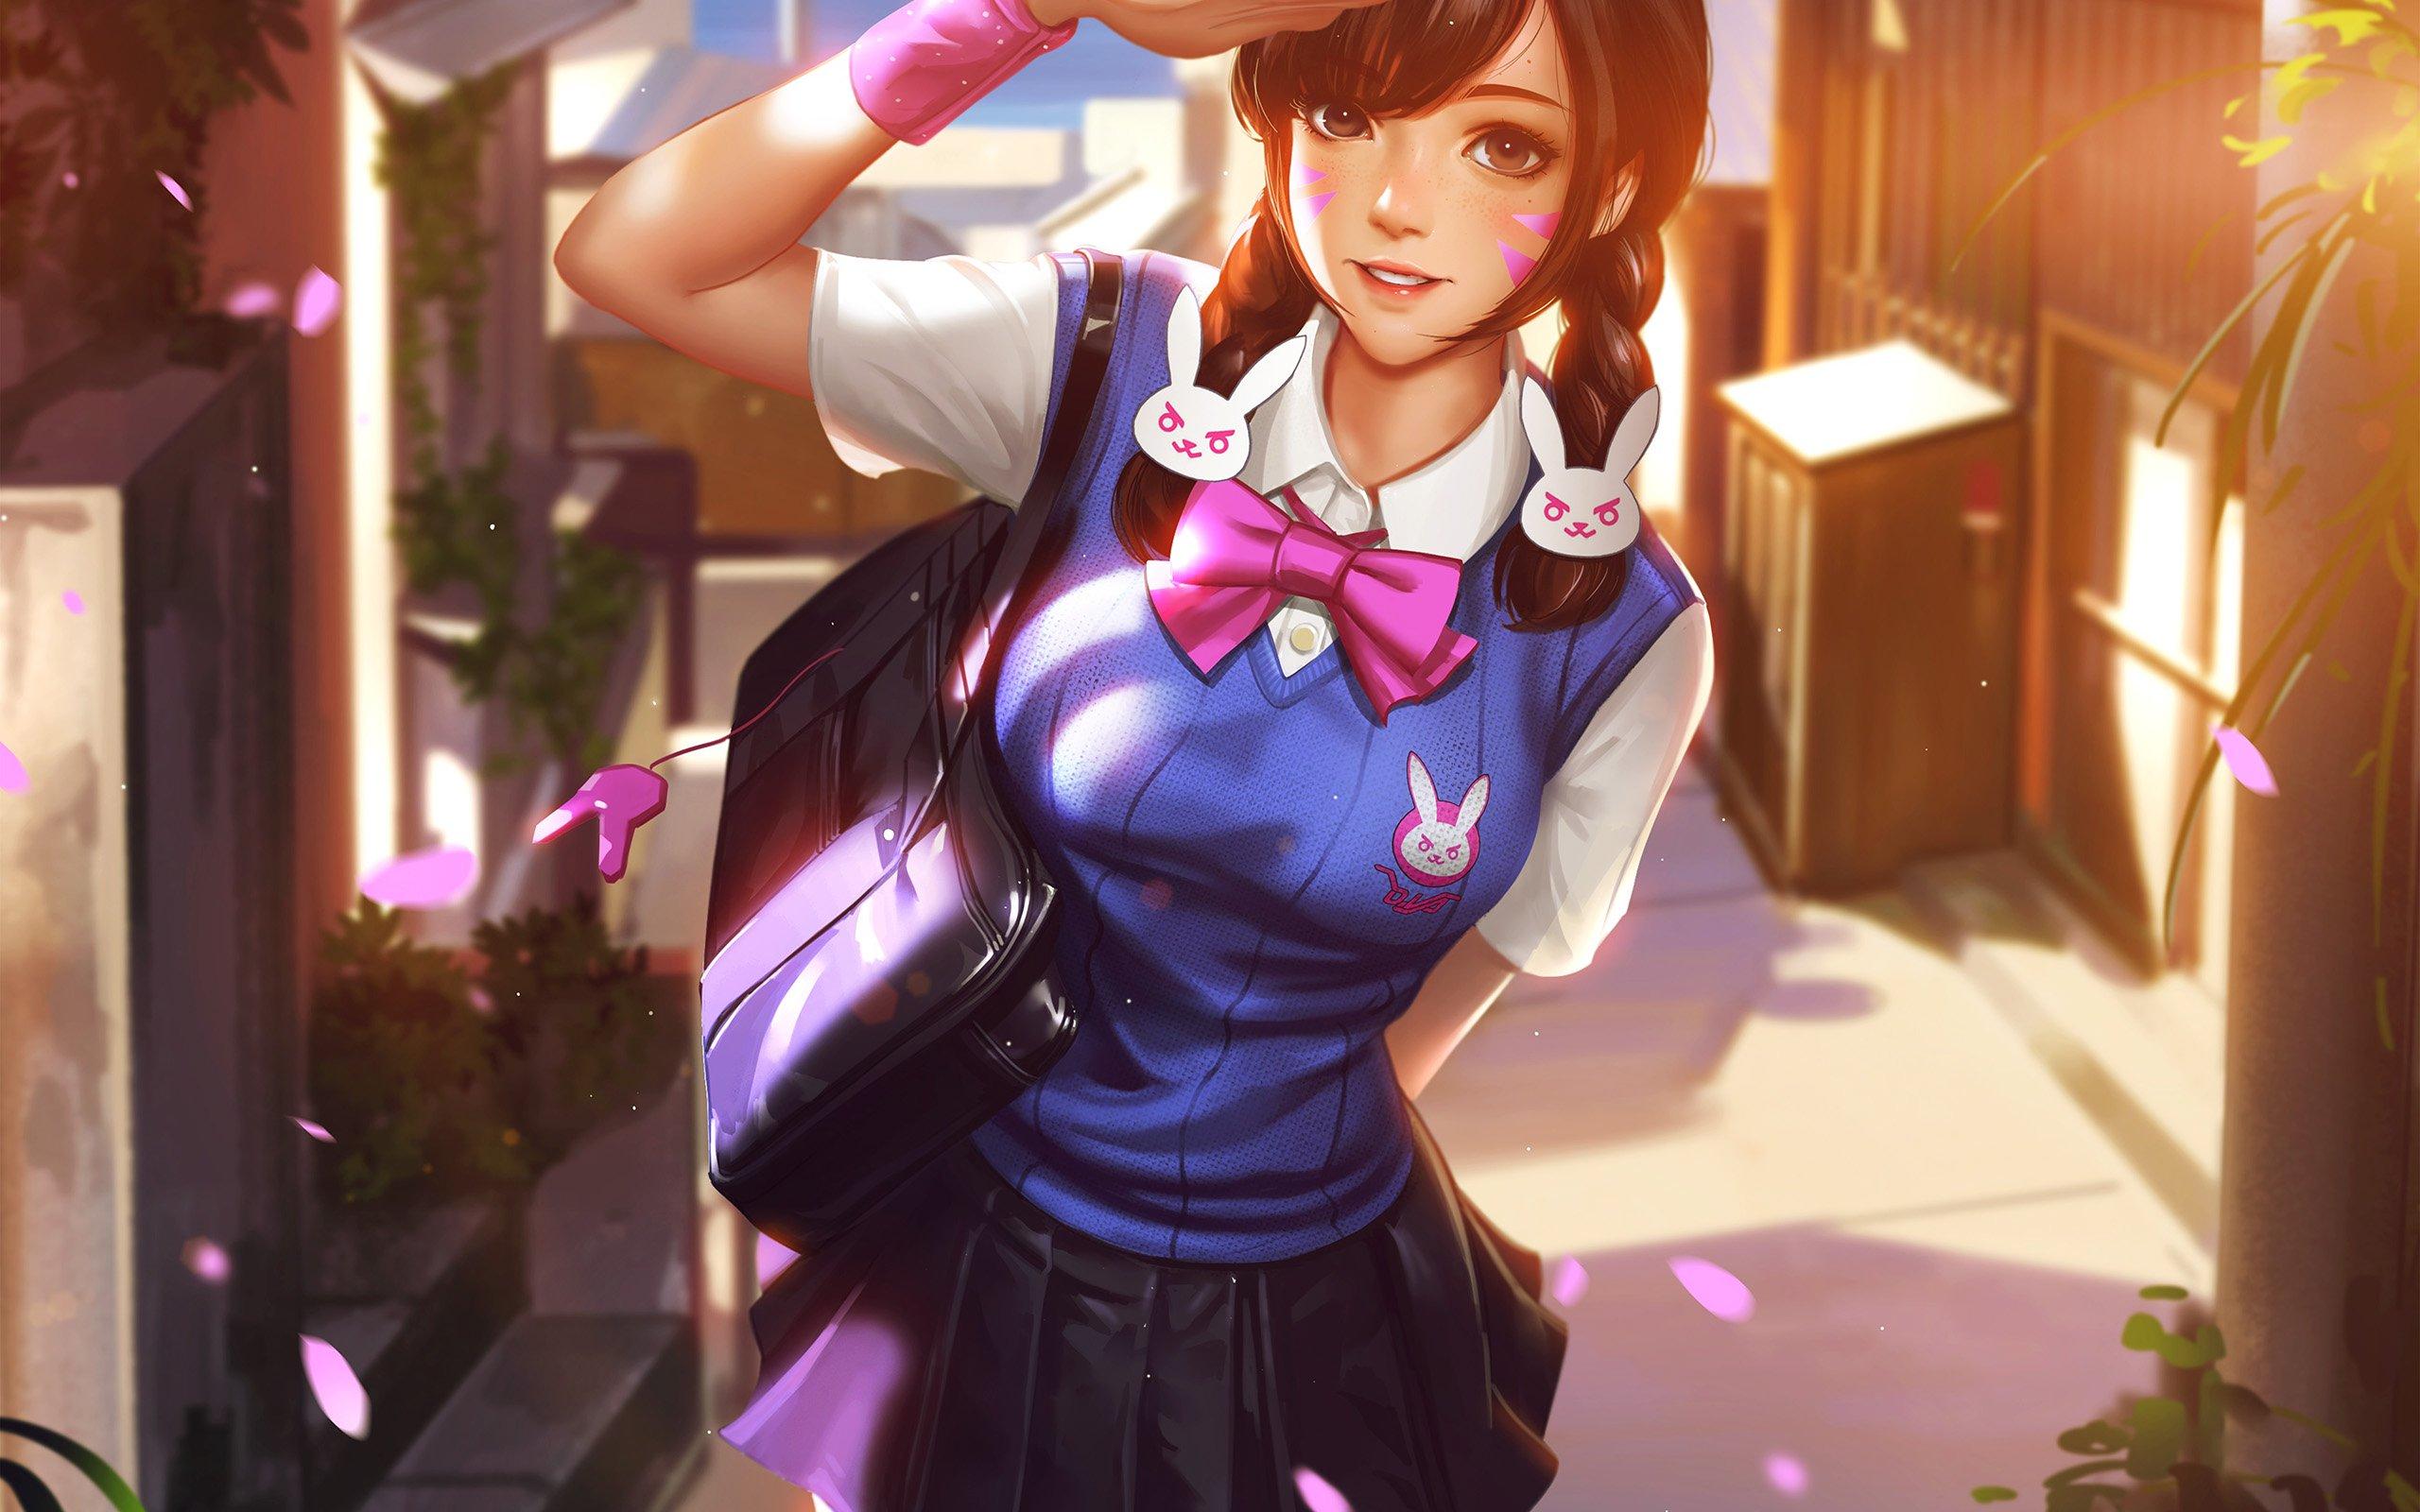 Anime gaming girl wallpaper hd